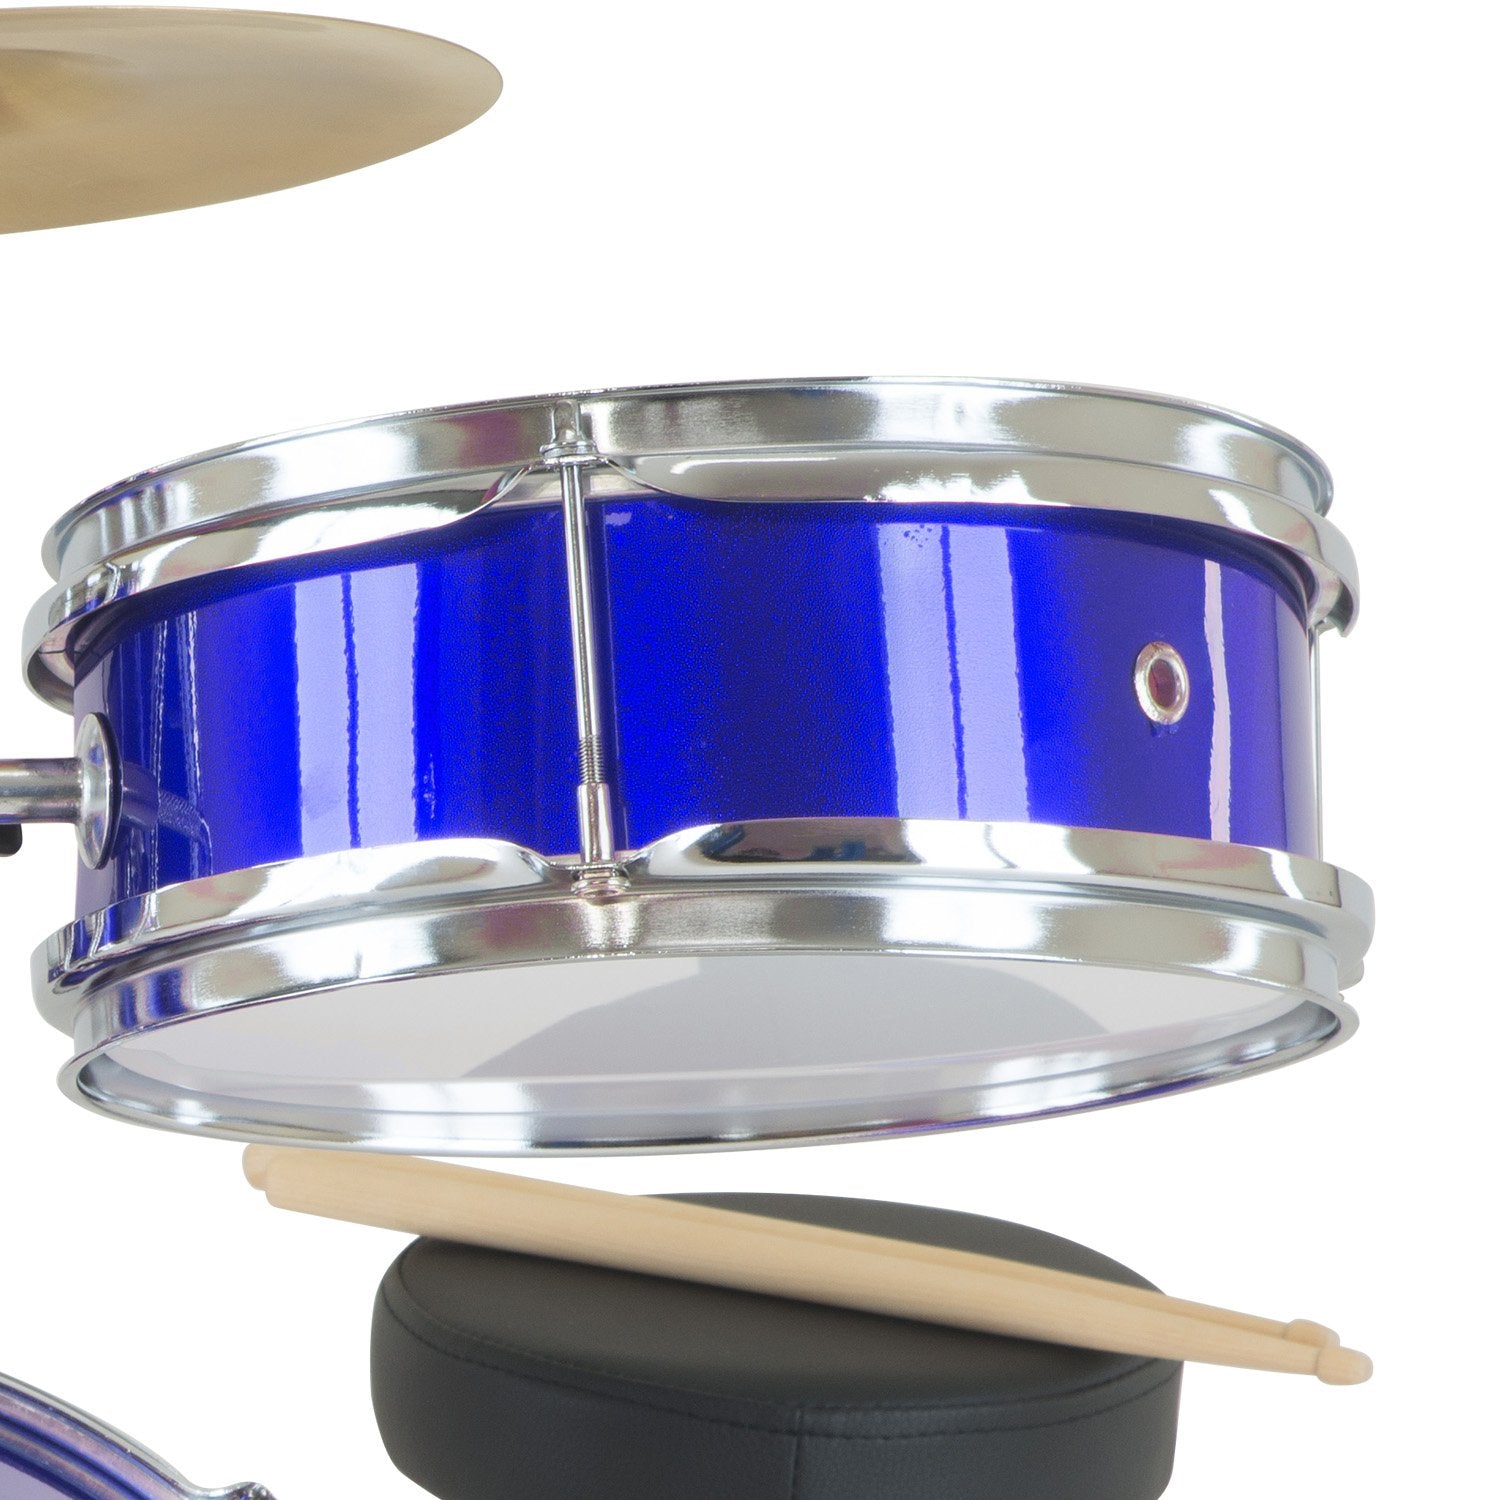 Karrera Children's 4pc Drum Kit - Blue - SILBERSHELL